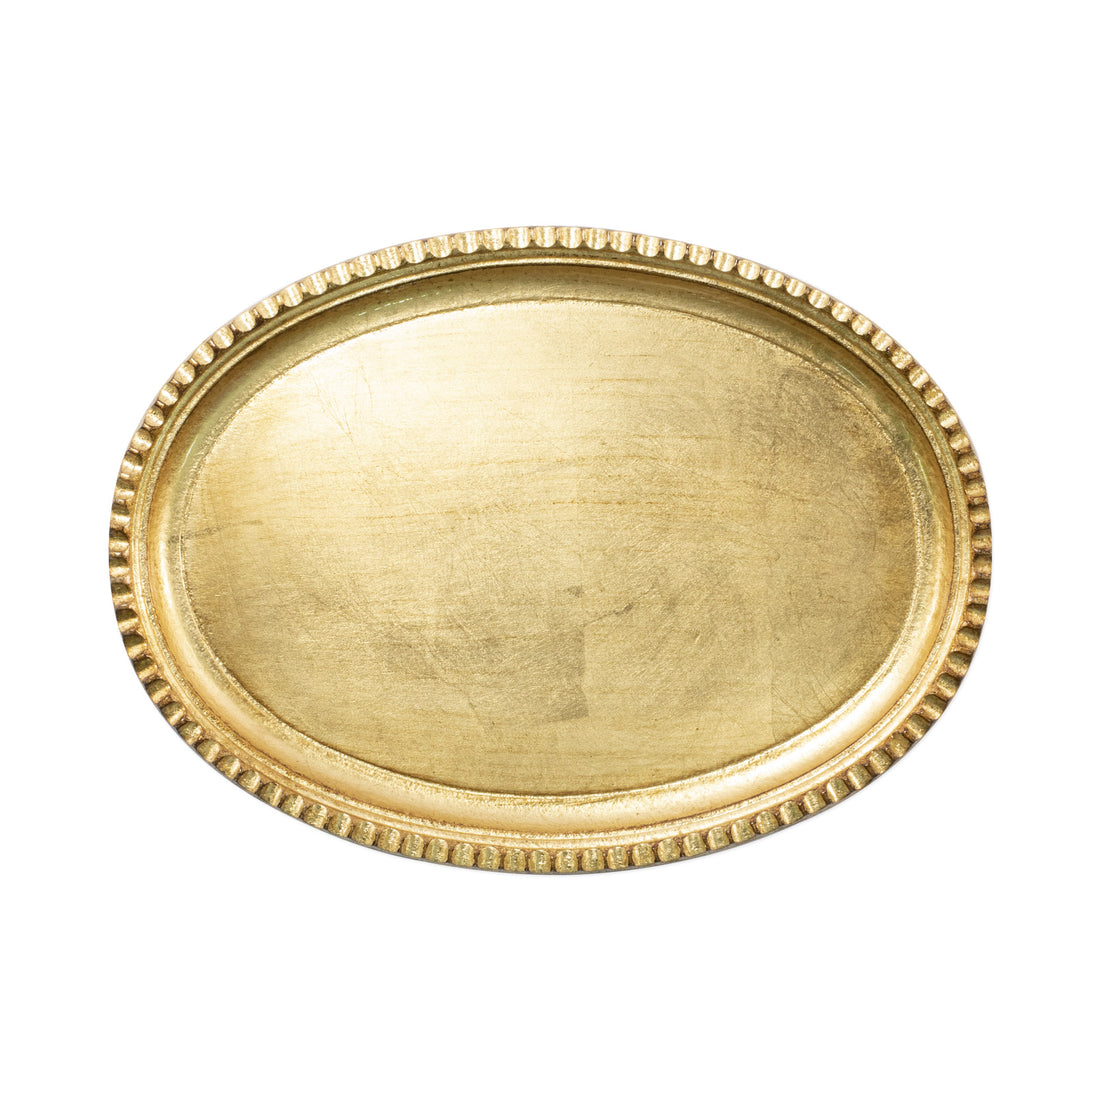 Vietri Florentine Gold Small Oval Tray